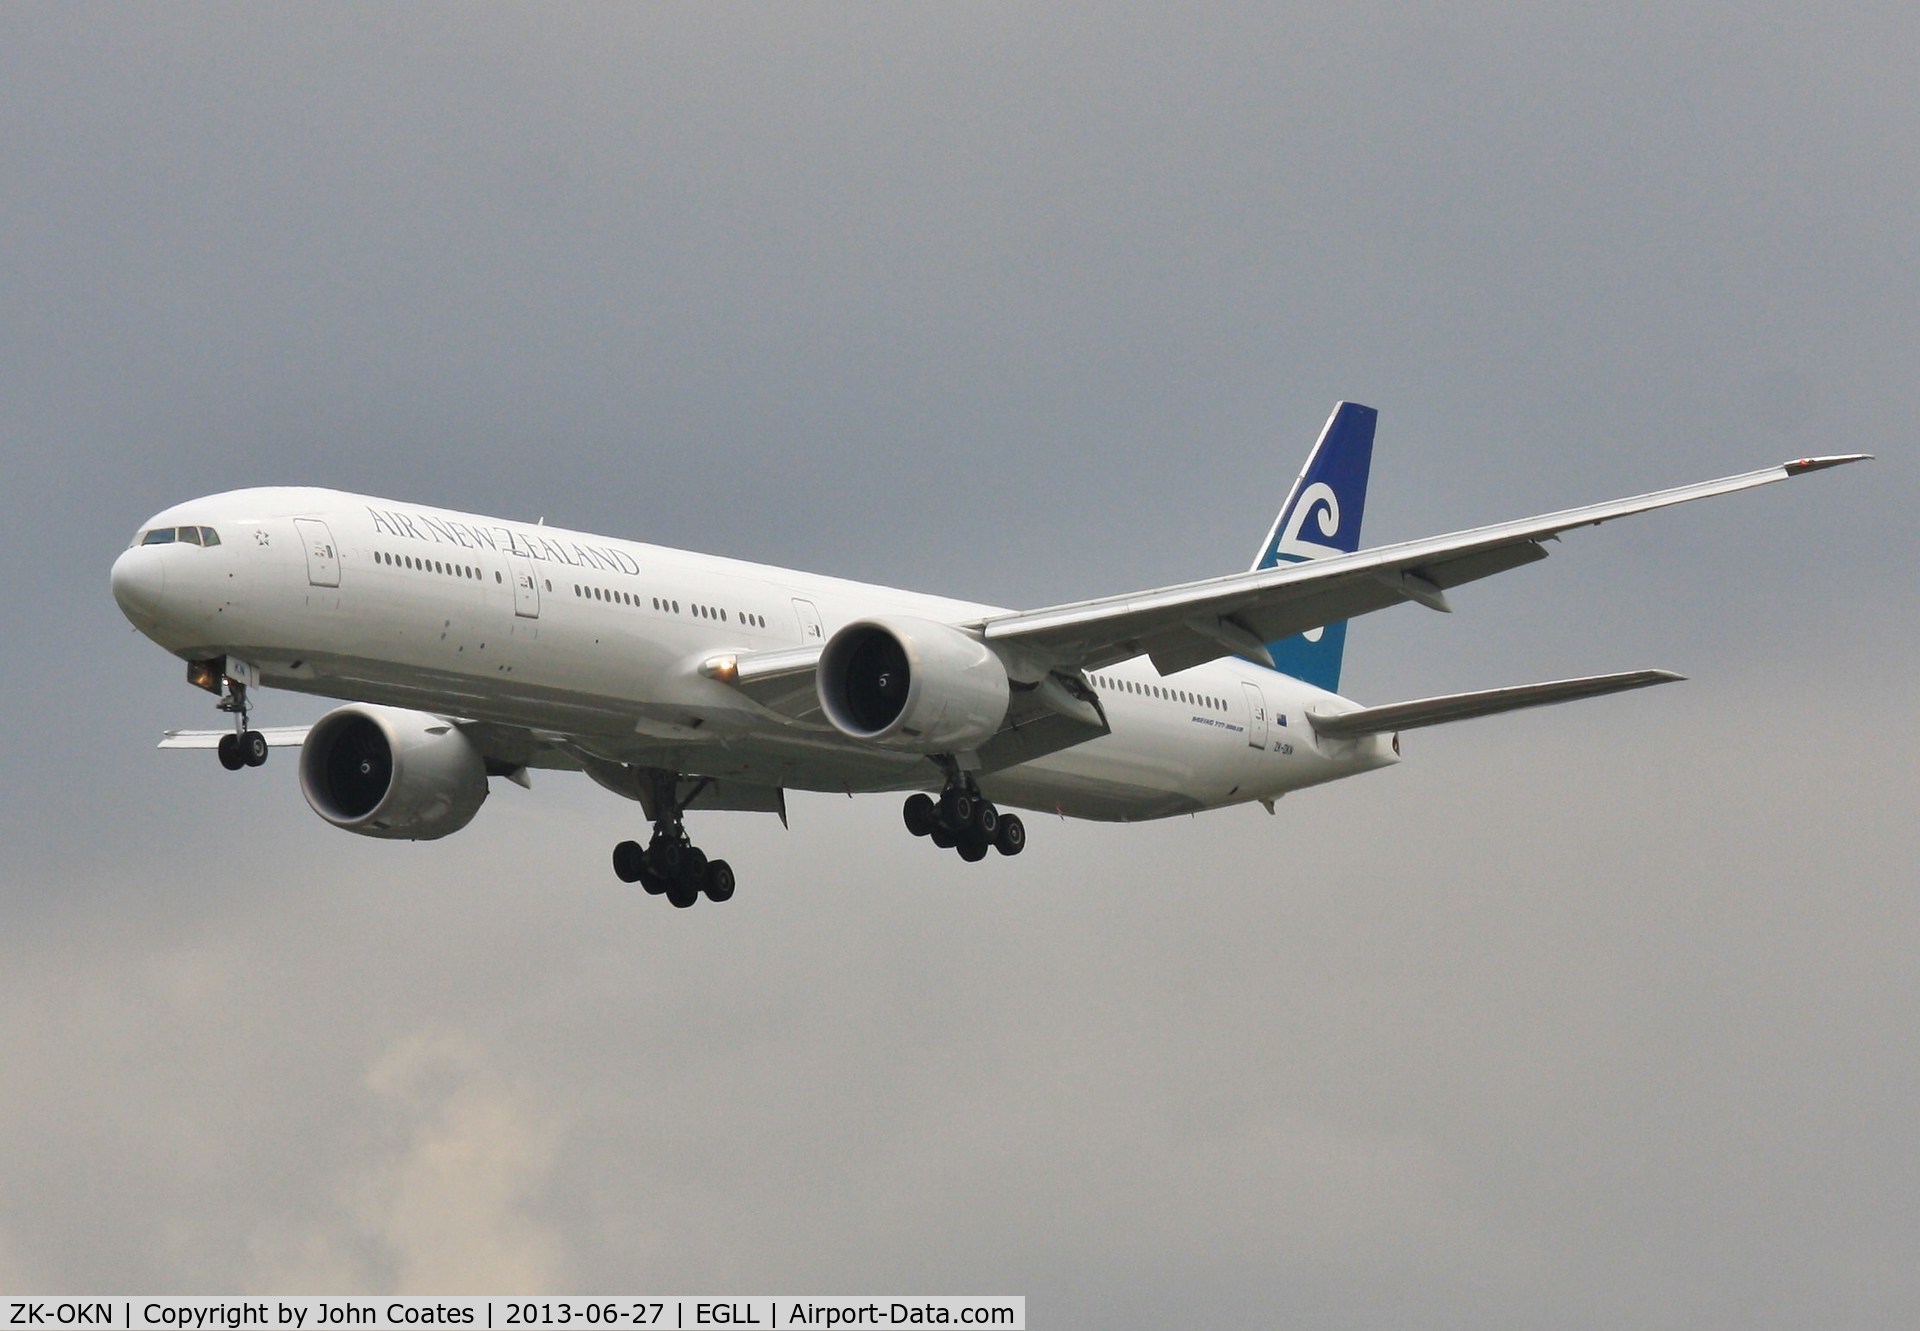 ZK-OKN, 2010 Boeing 777-306/ER C/N 38406, Finals to 27L